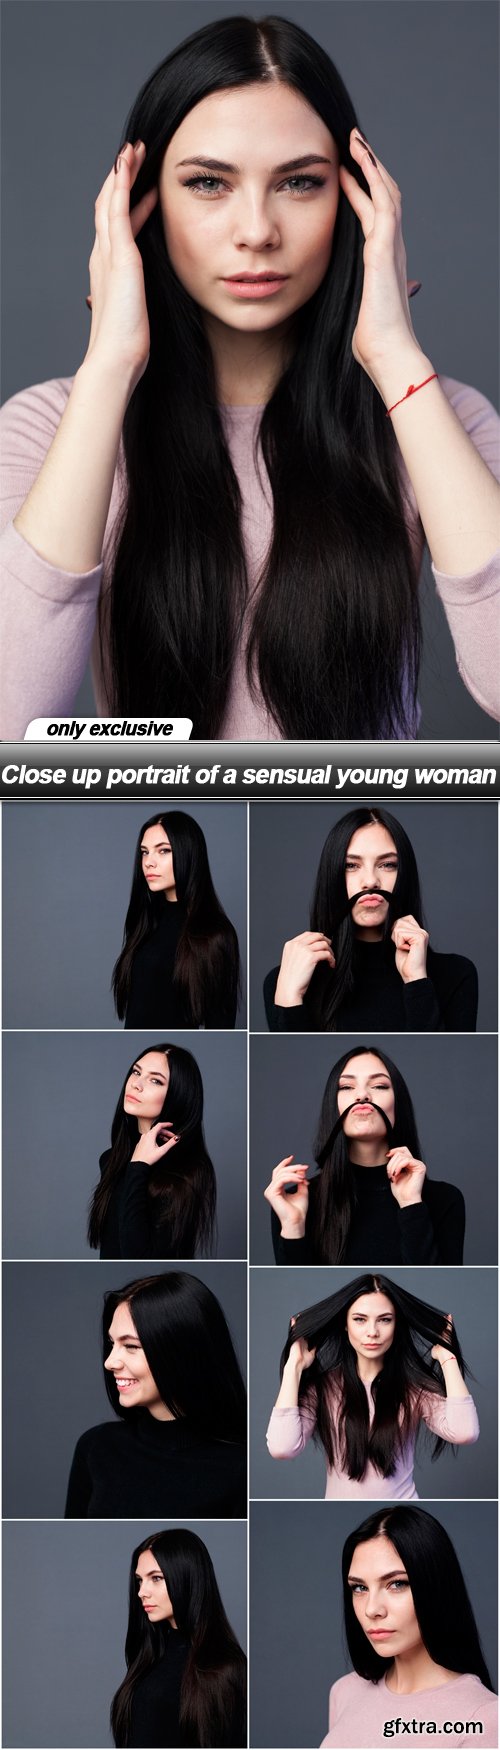 Close up portrait of a sensual young woman - 9 UHQ JPEG